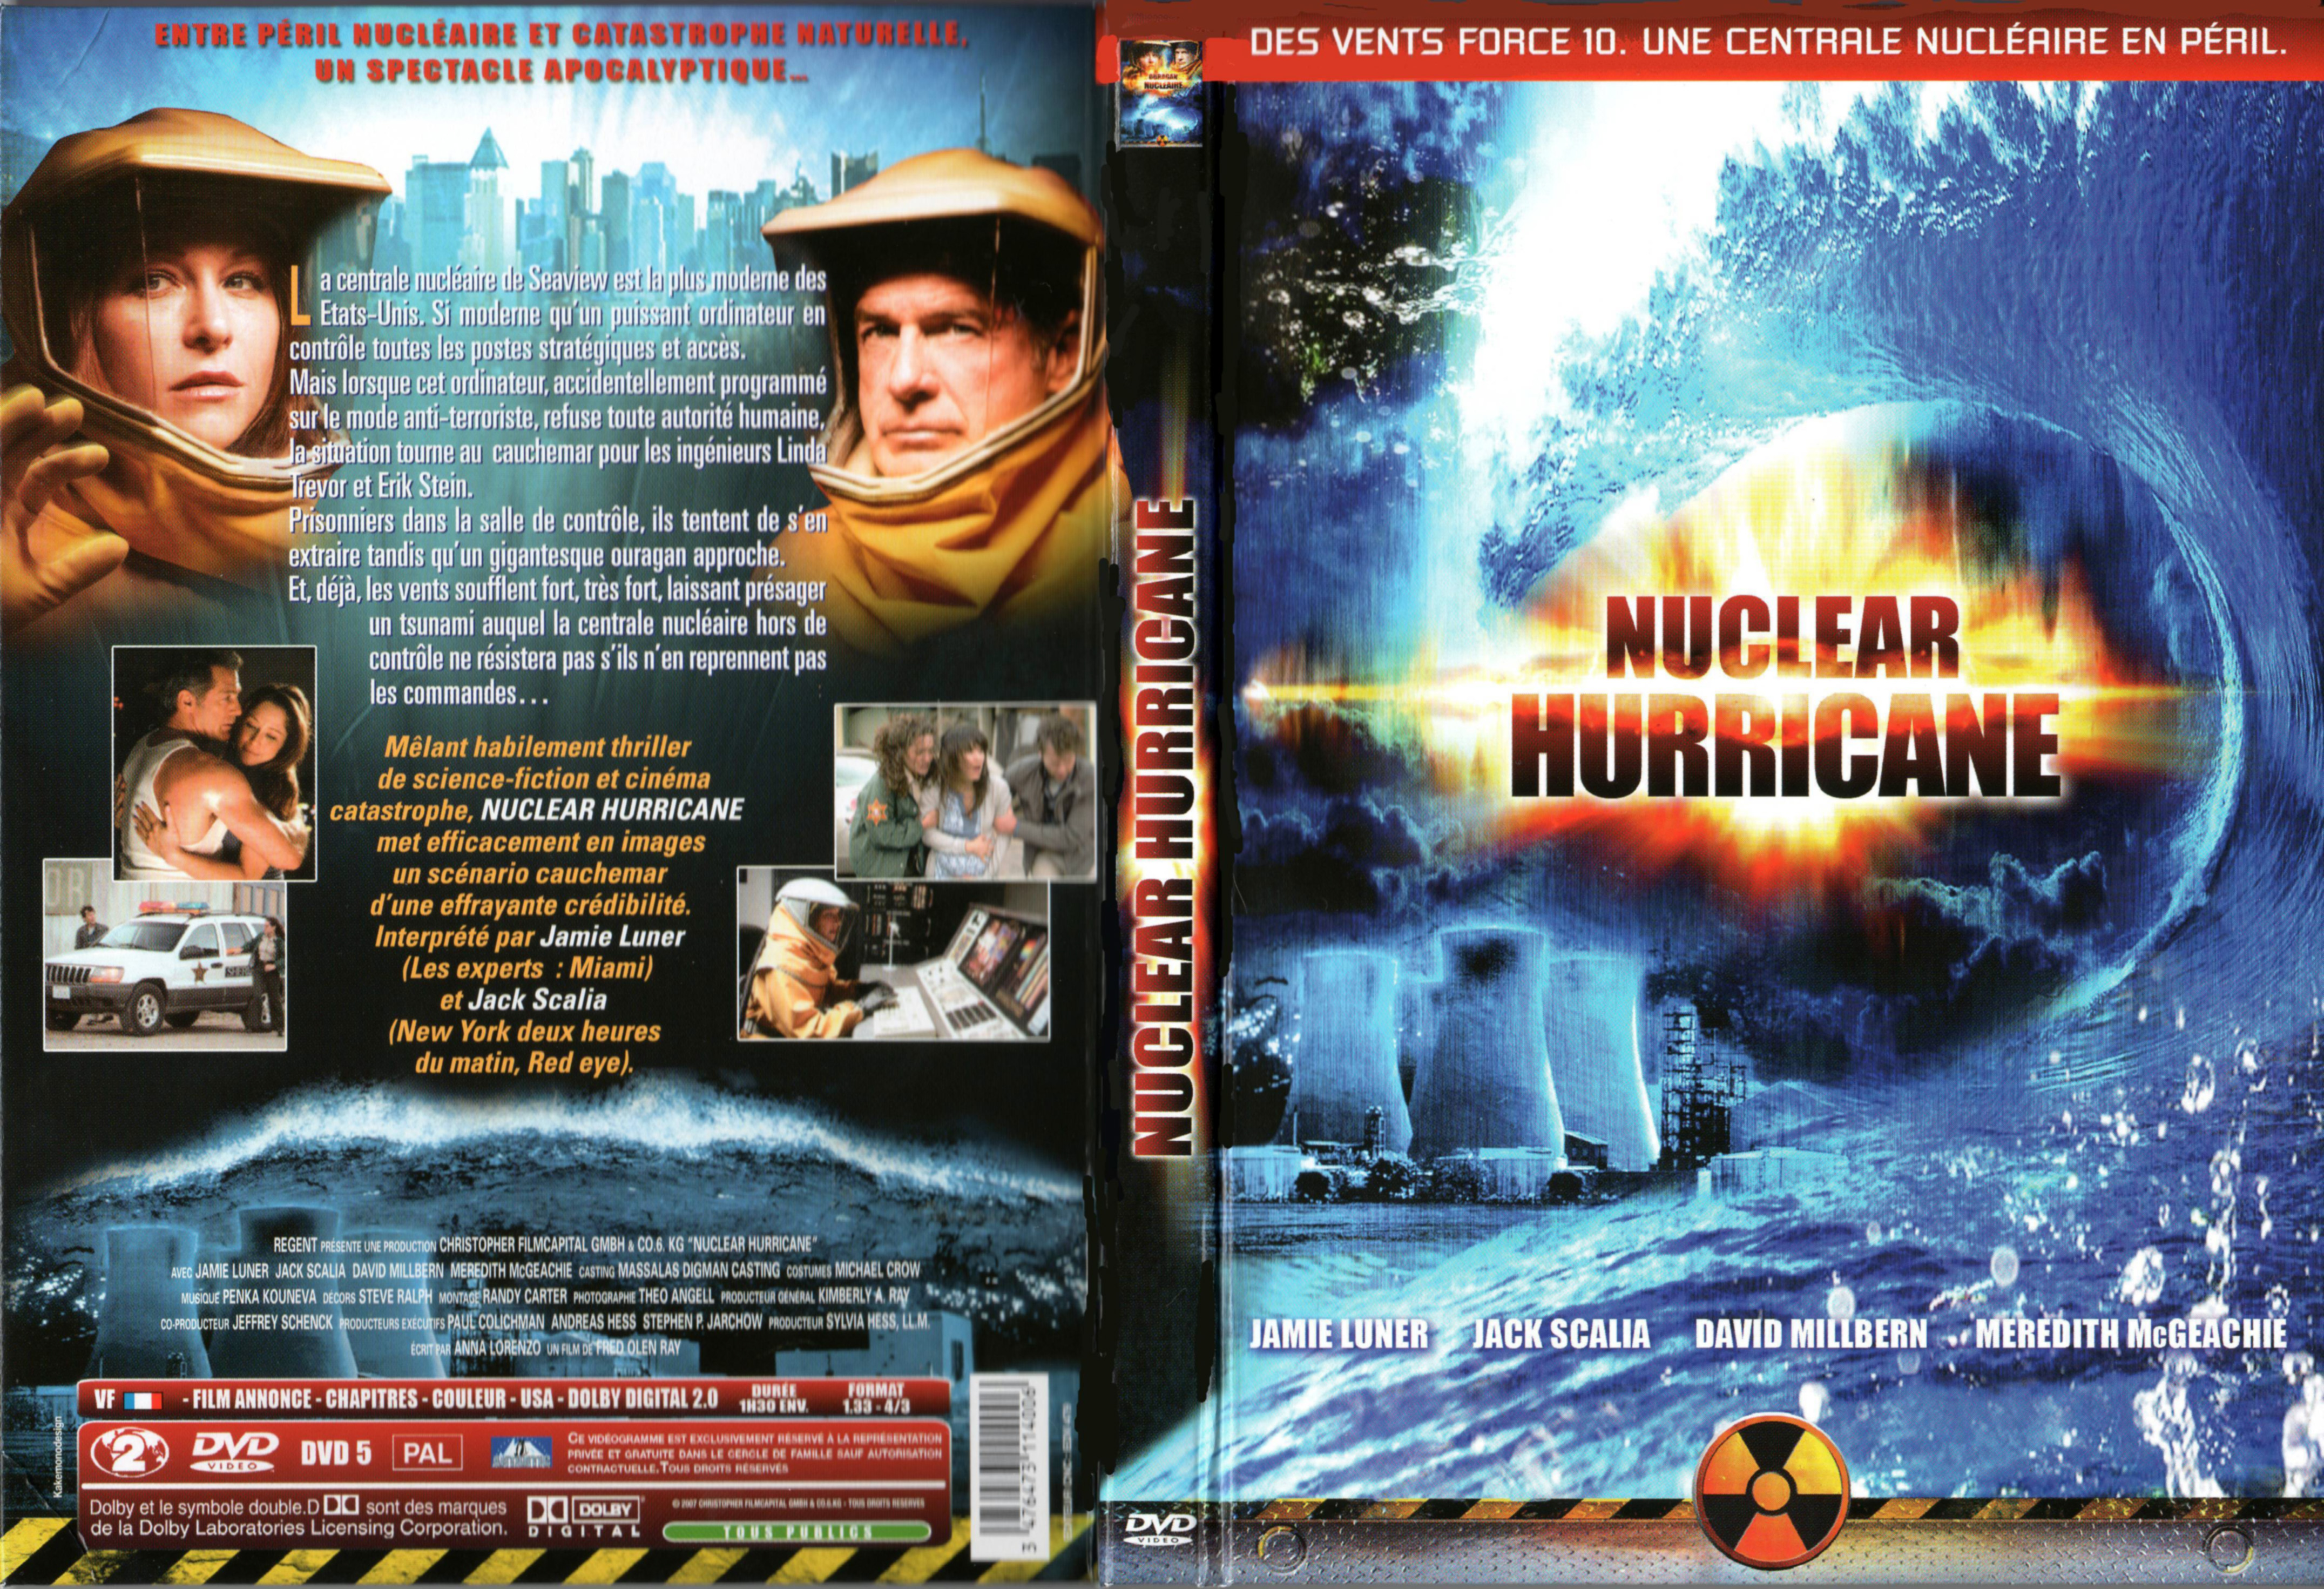 Jaquette DVD Nuclear hurricane